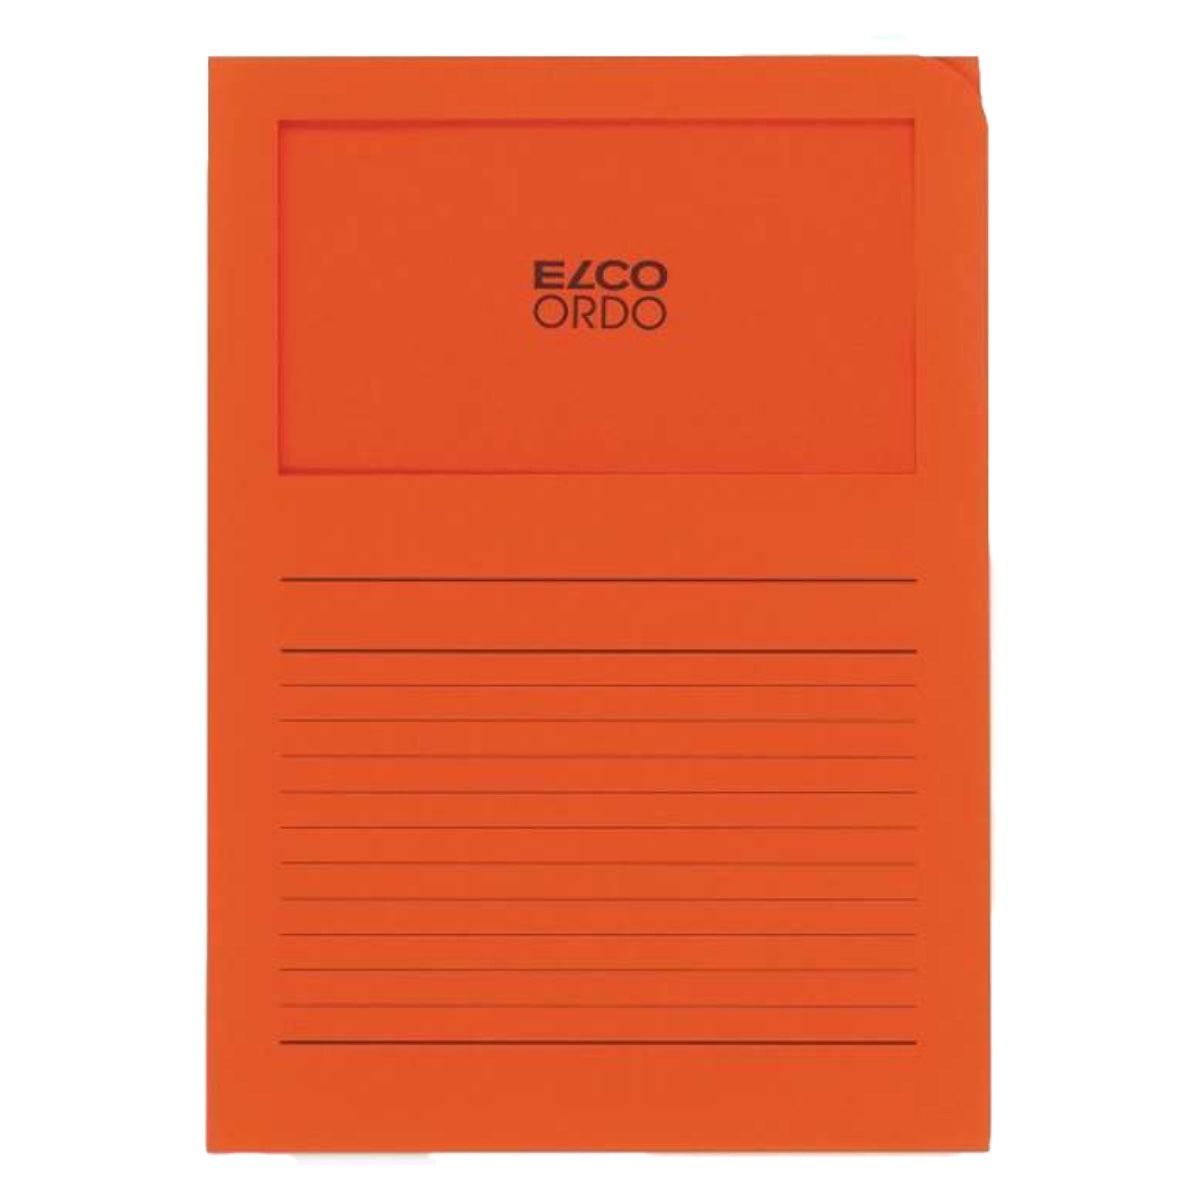 Elco Ordo Classico, L Paper Folder with Window, 5/pack, Orange